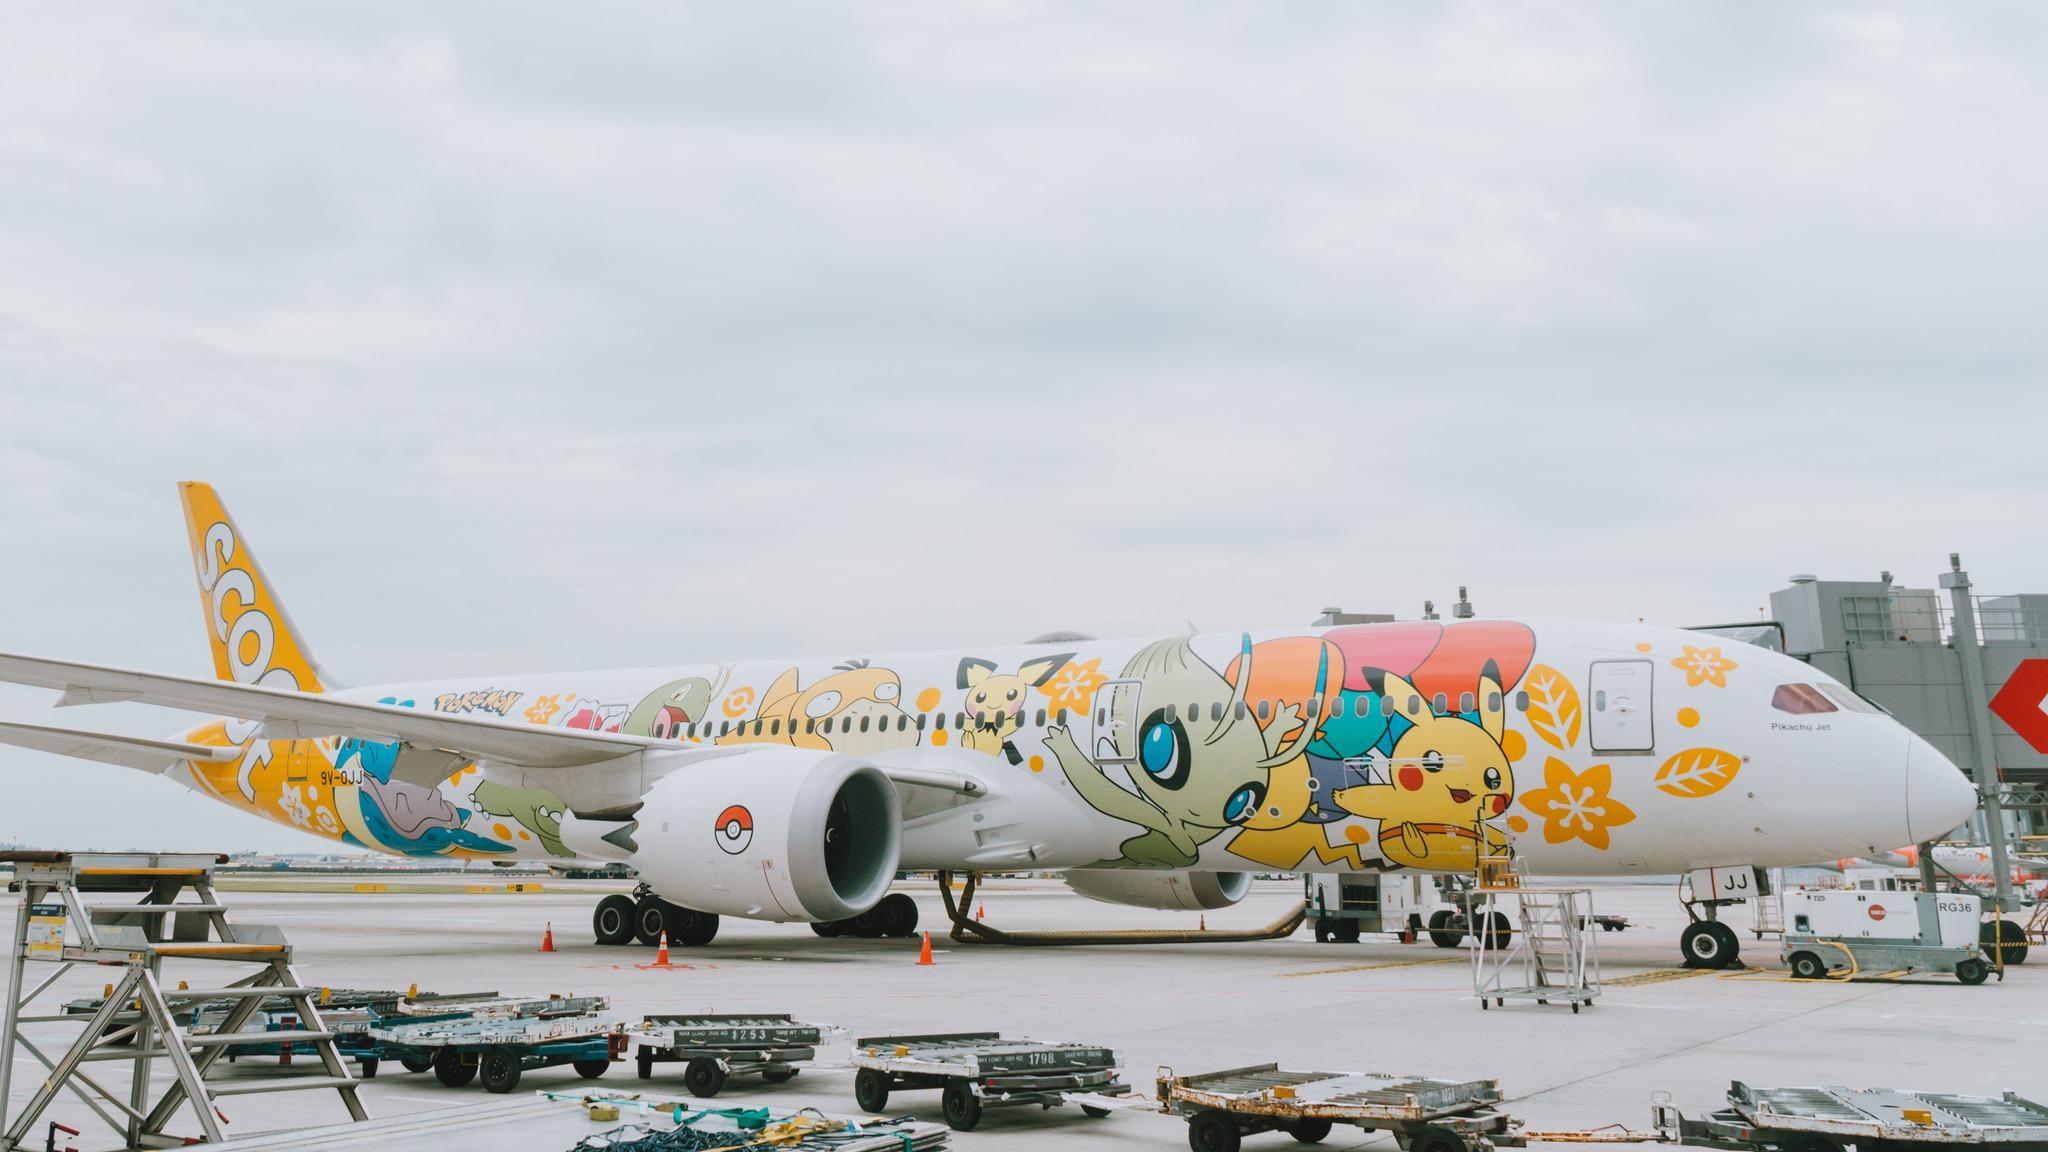 Experience the Pokémon flight of your life through the Pikachu Jet!